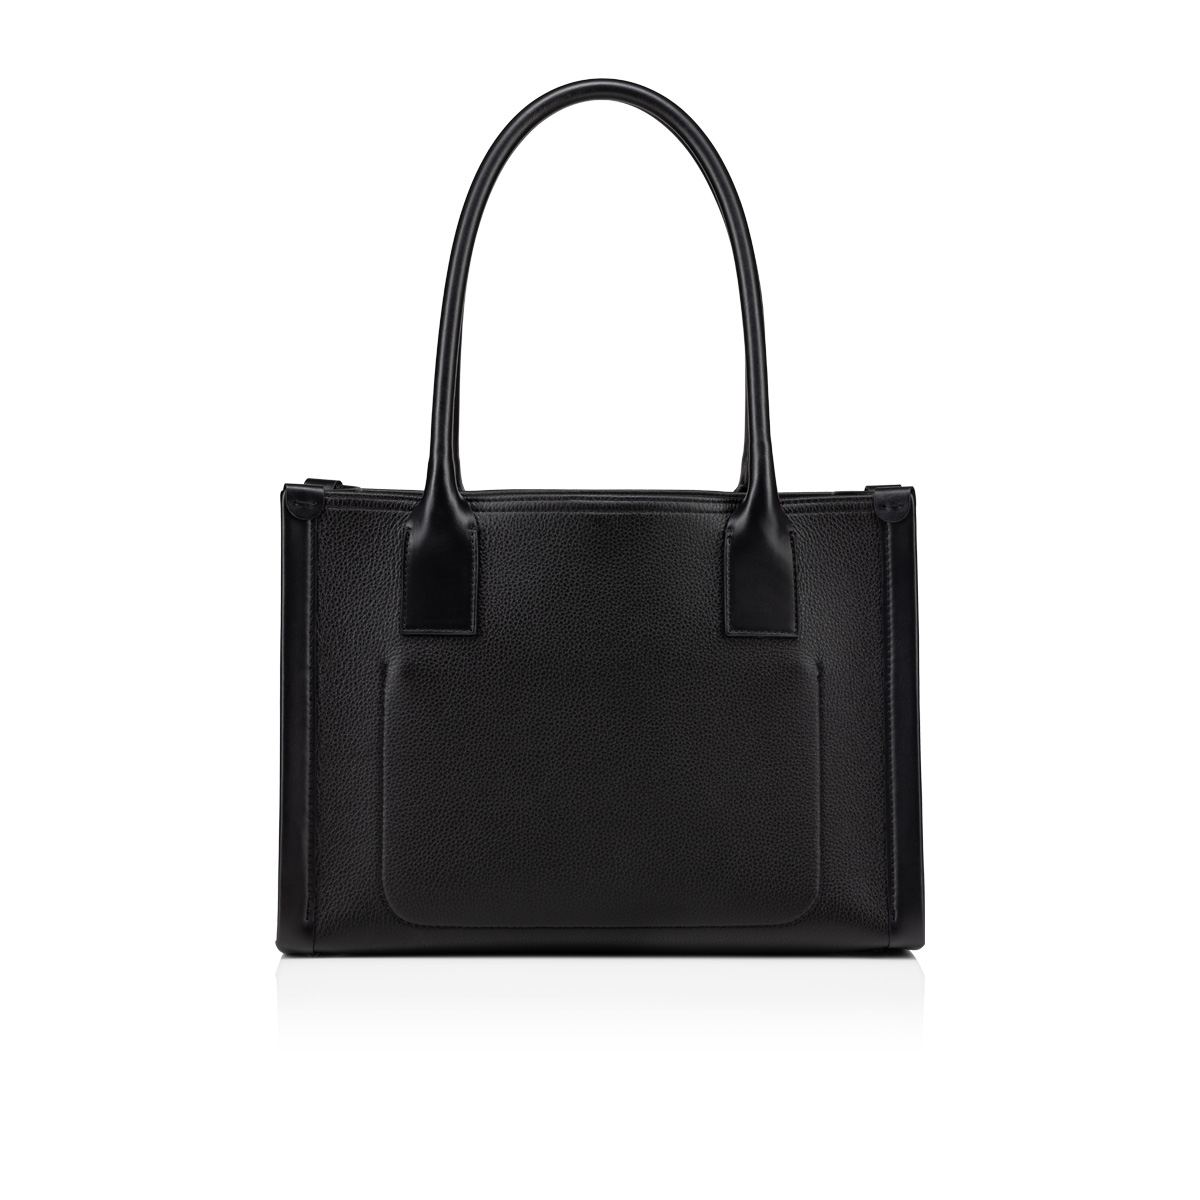 Christian Louboutin Pre-owned Women's Leather Handbag - Black - One Size